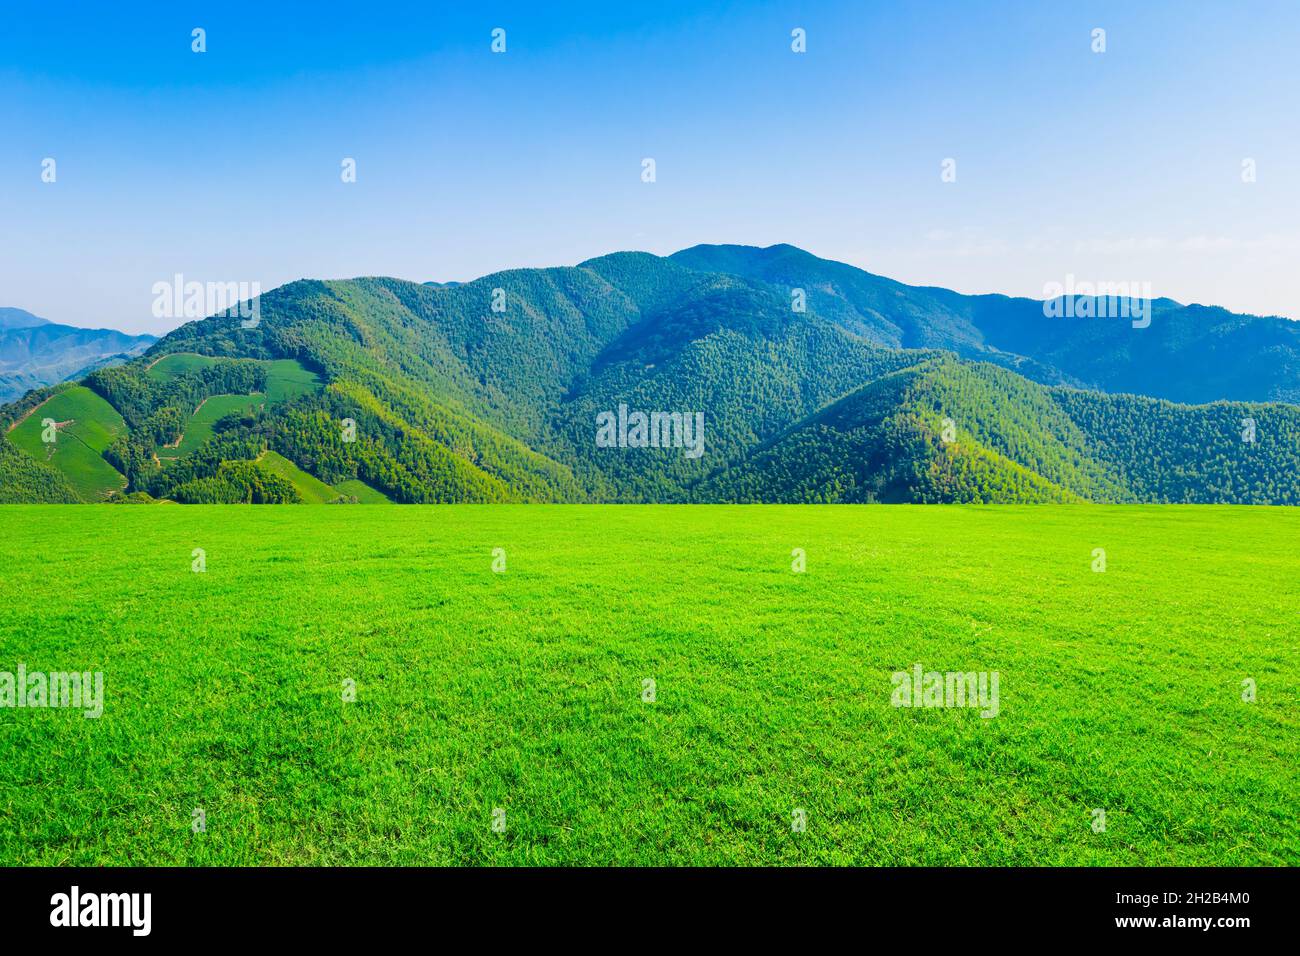 Green grass and mountain in spring season. Stock Photo